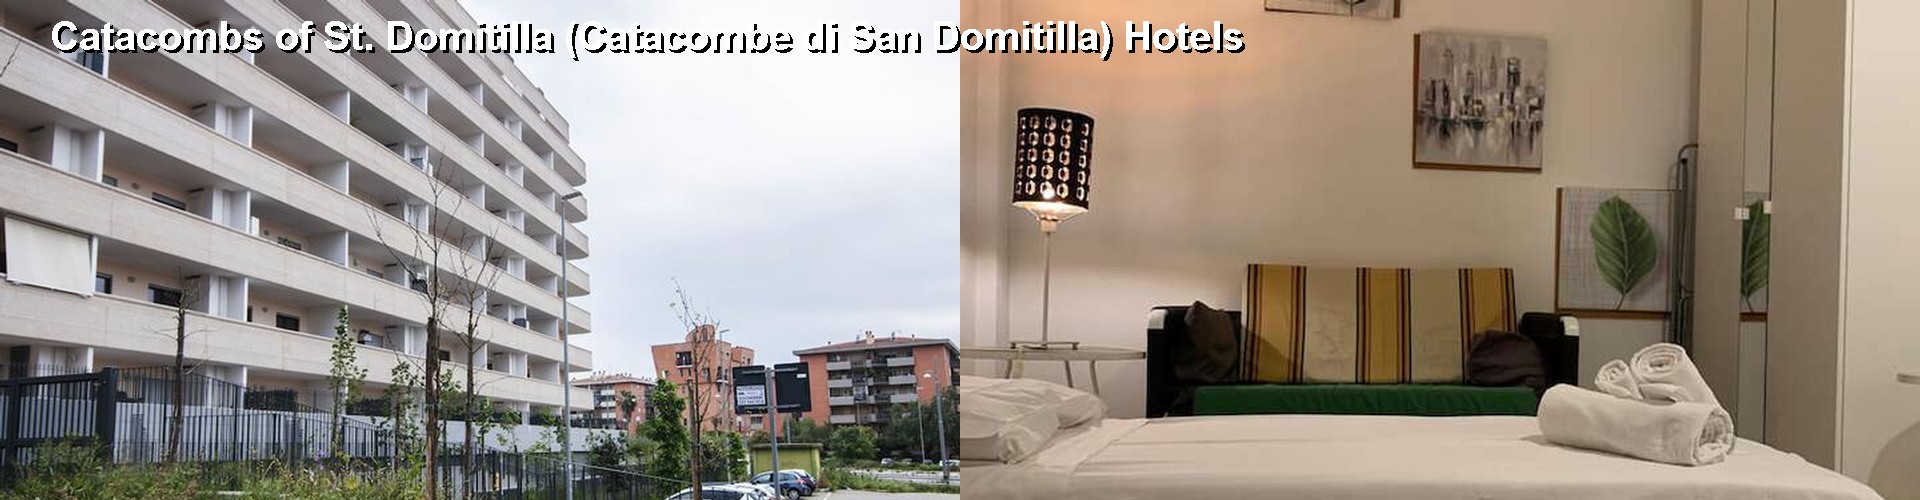 5 Best Hotels near Catacombs of St. Domitilla (Catacombe di San Domitilla)